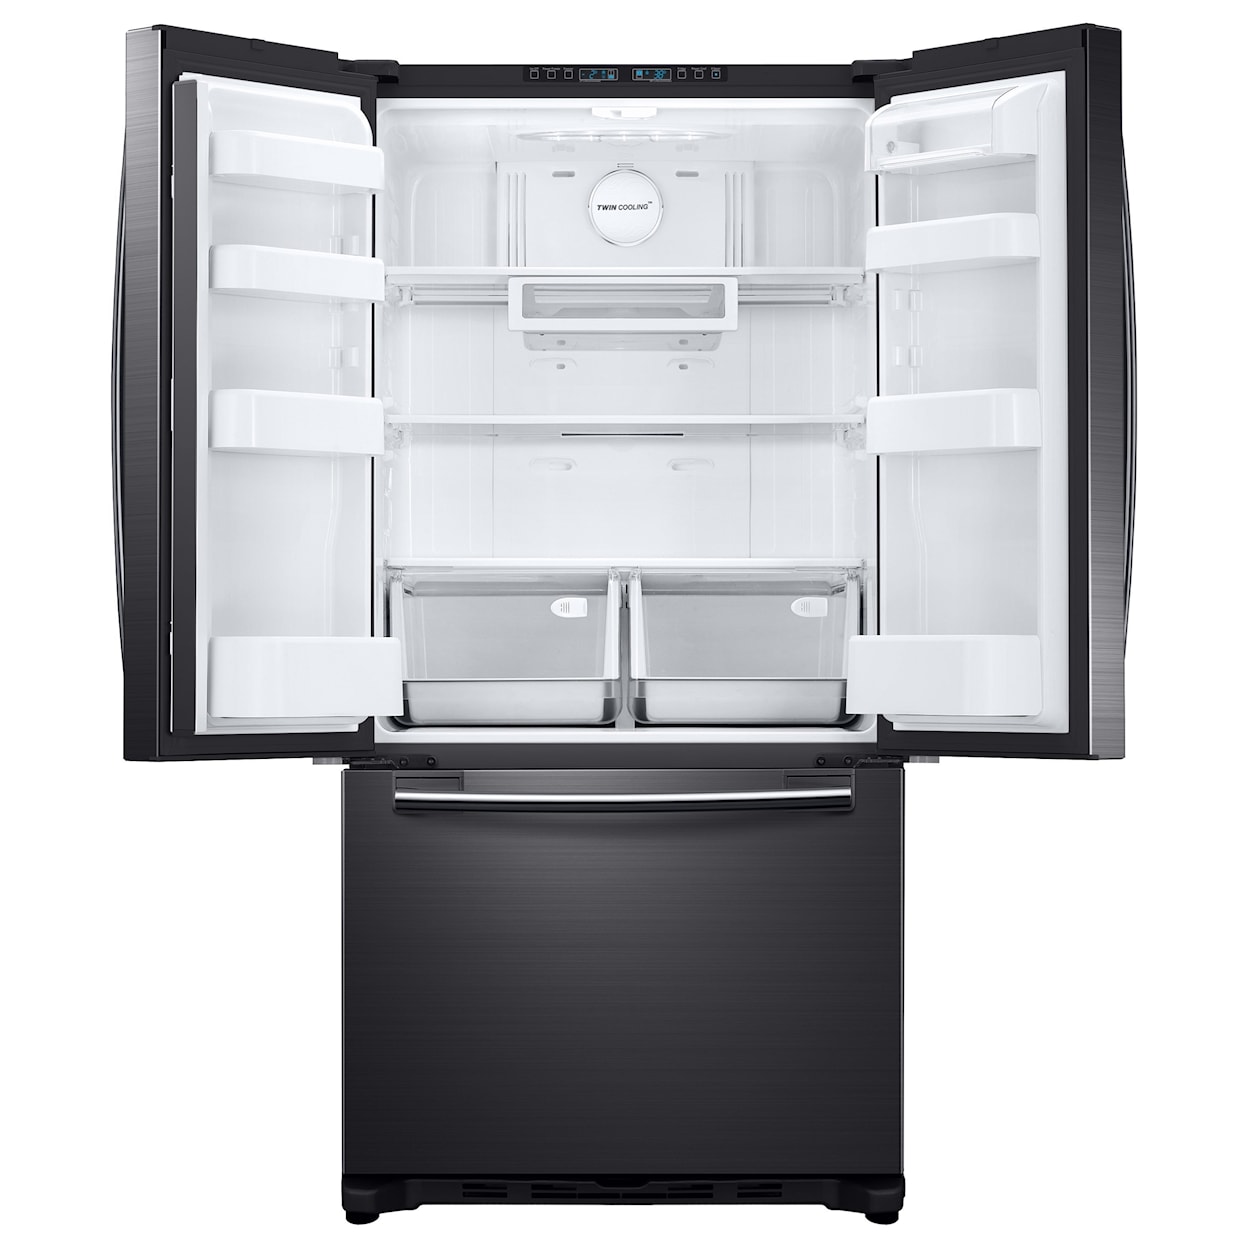 Samsung Appliances French Door Refrigerators 20 cu. ft. Capacity French Door Refrigerator